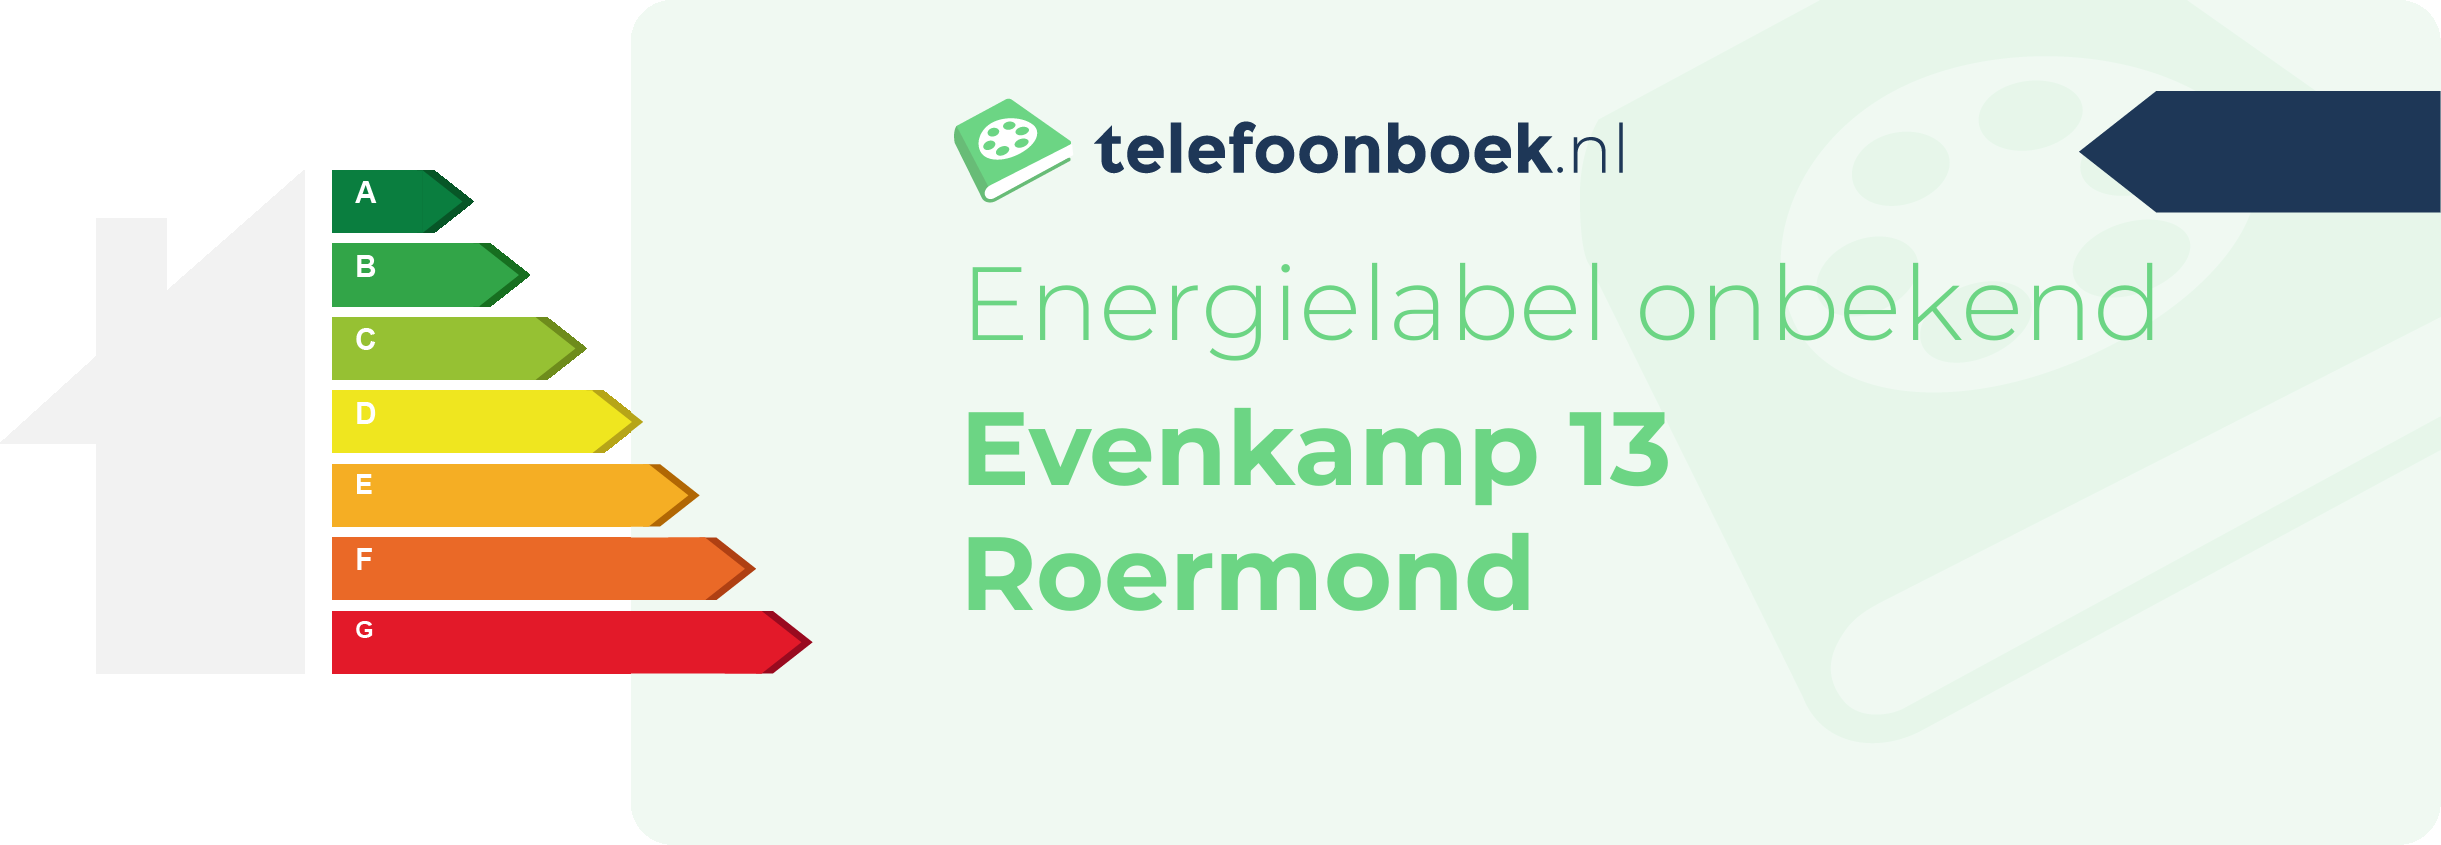 Energielabel Evenkamp 13 Roermond